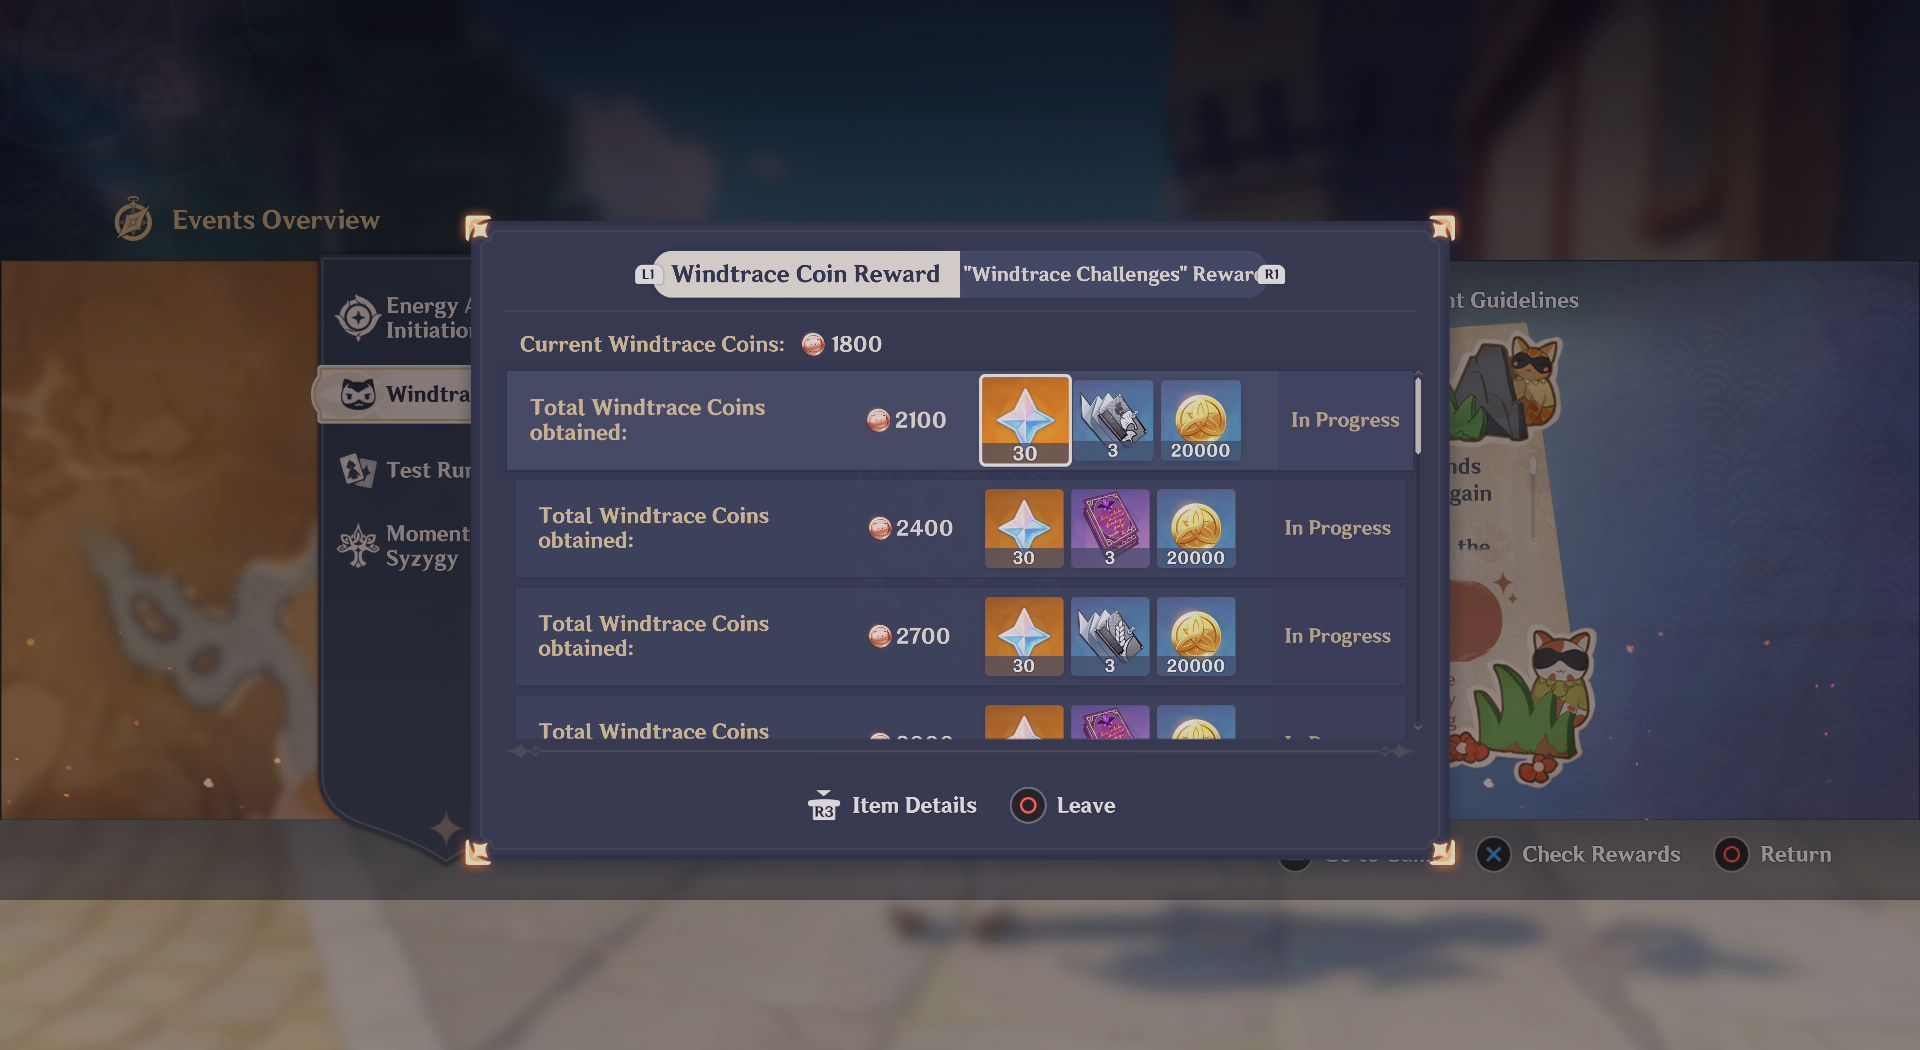 rewards event page